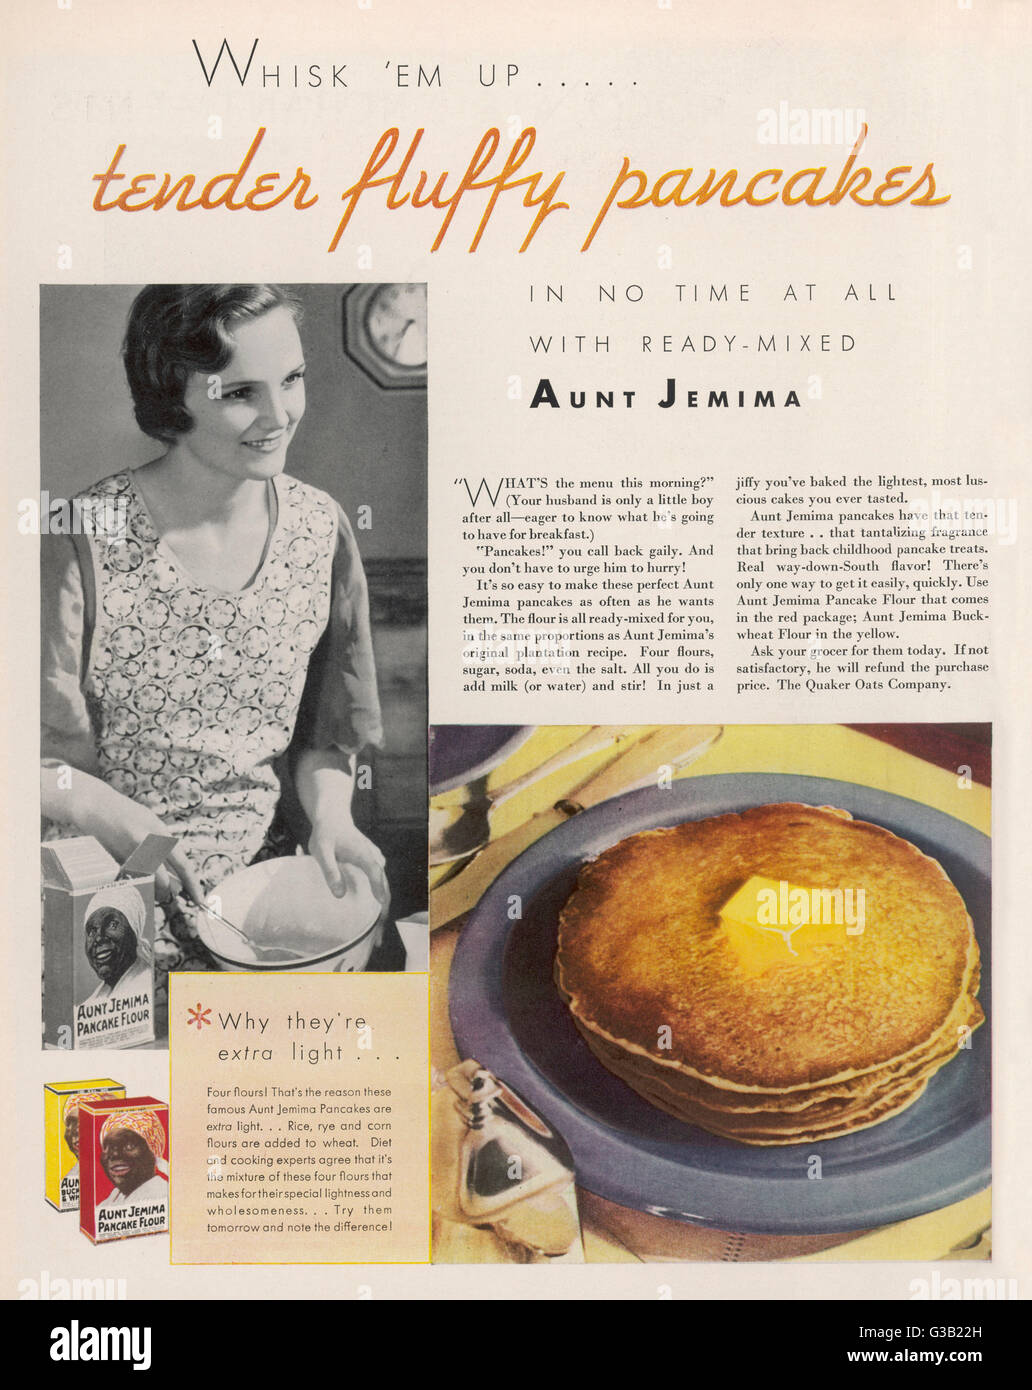 aunt jemima recipe for 4 pancakes